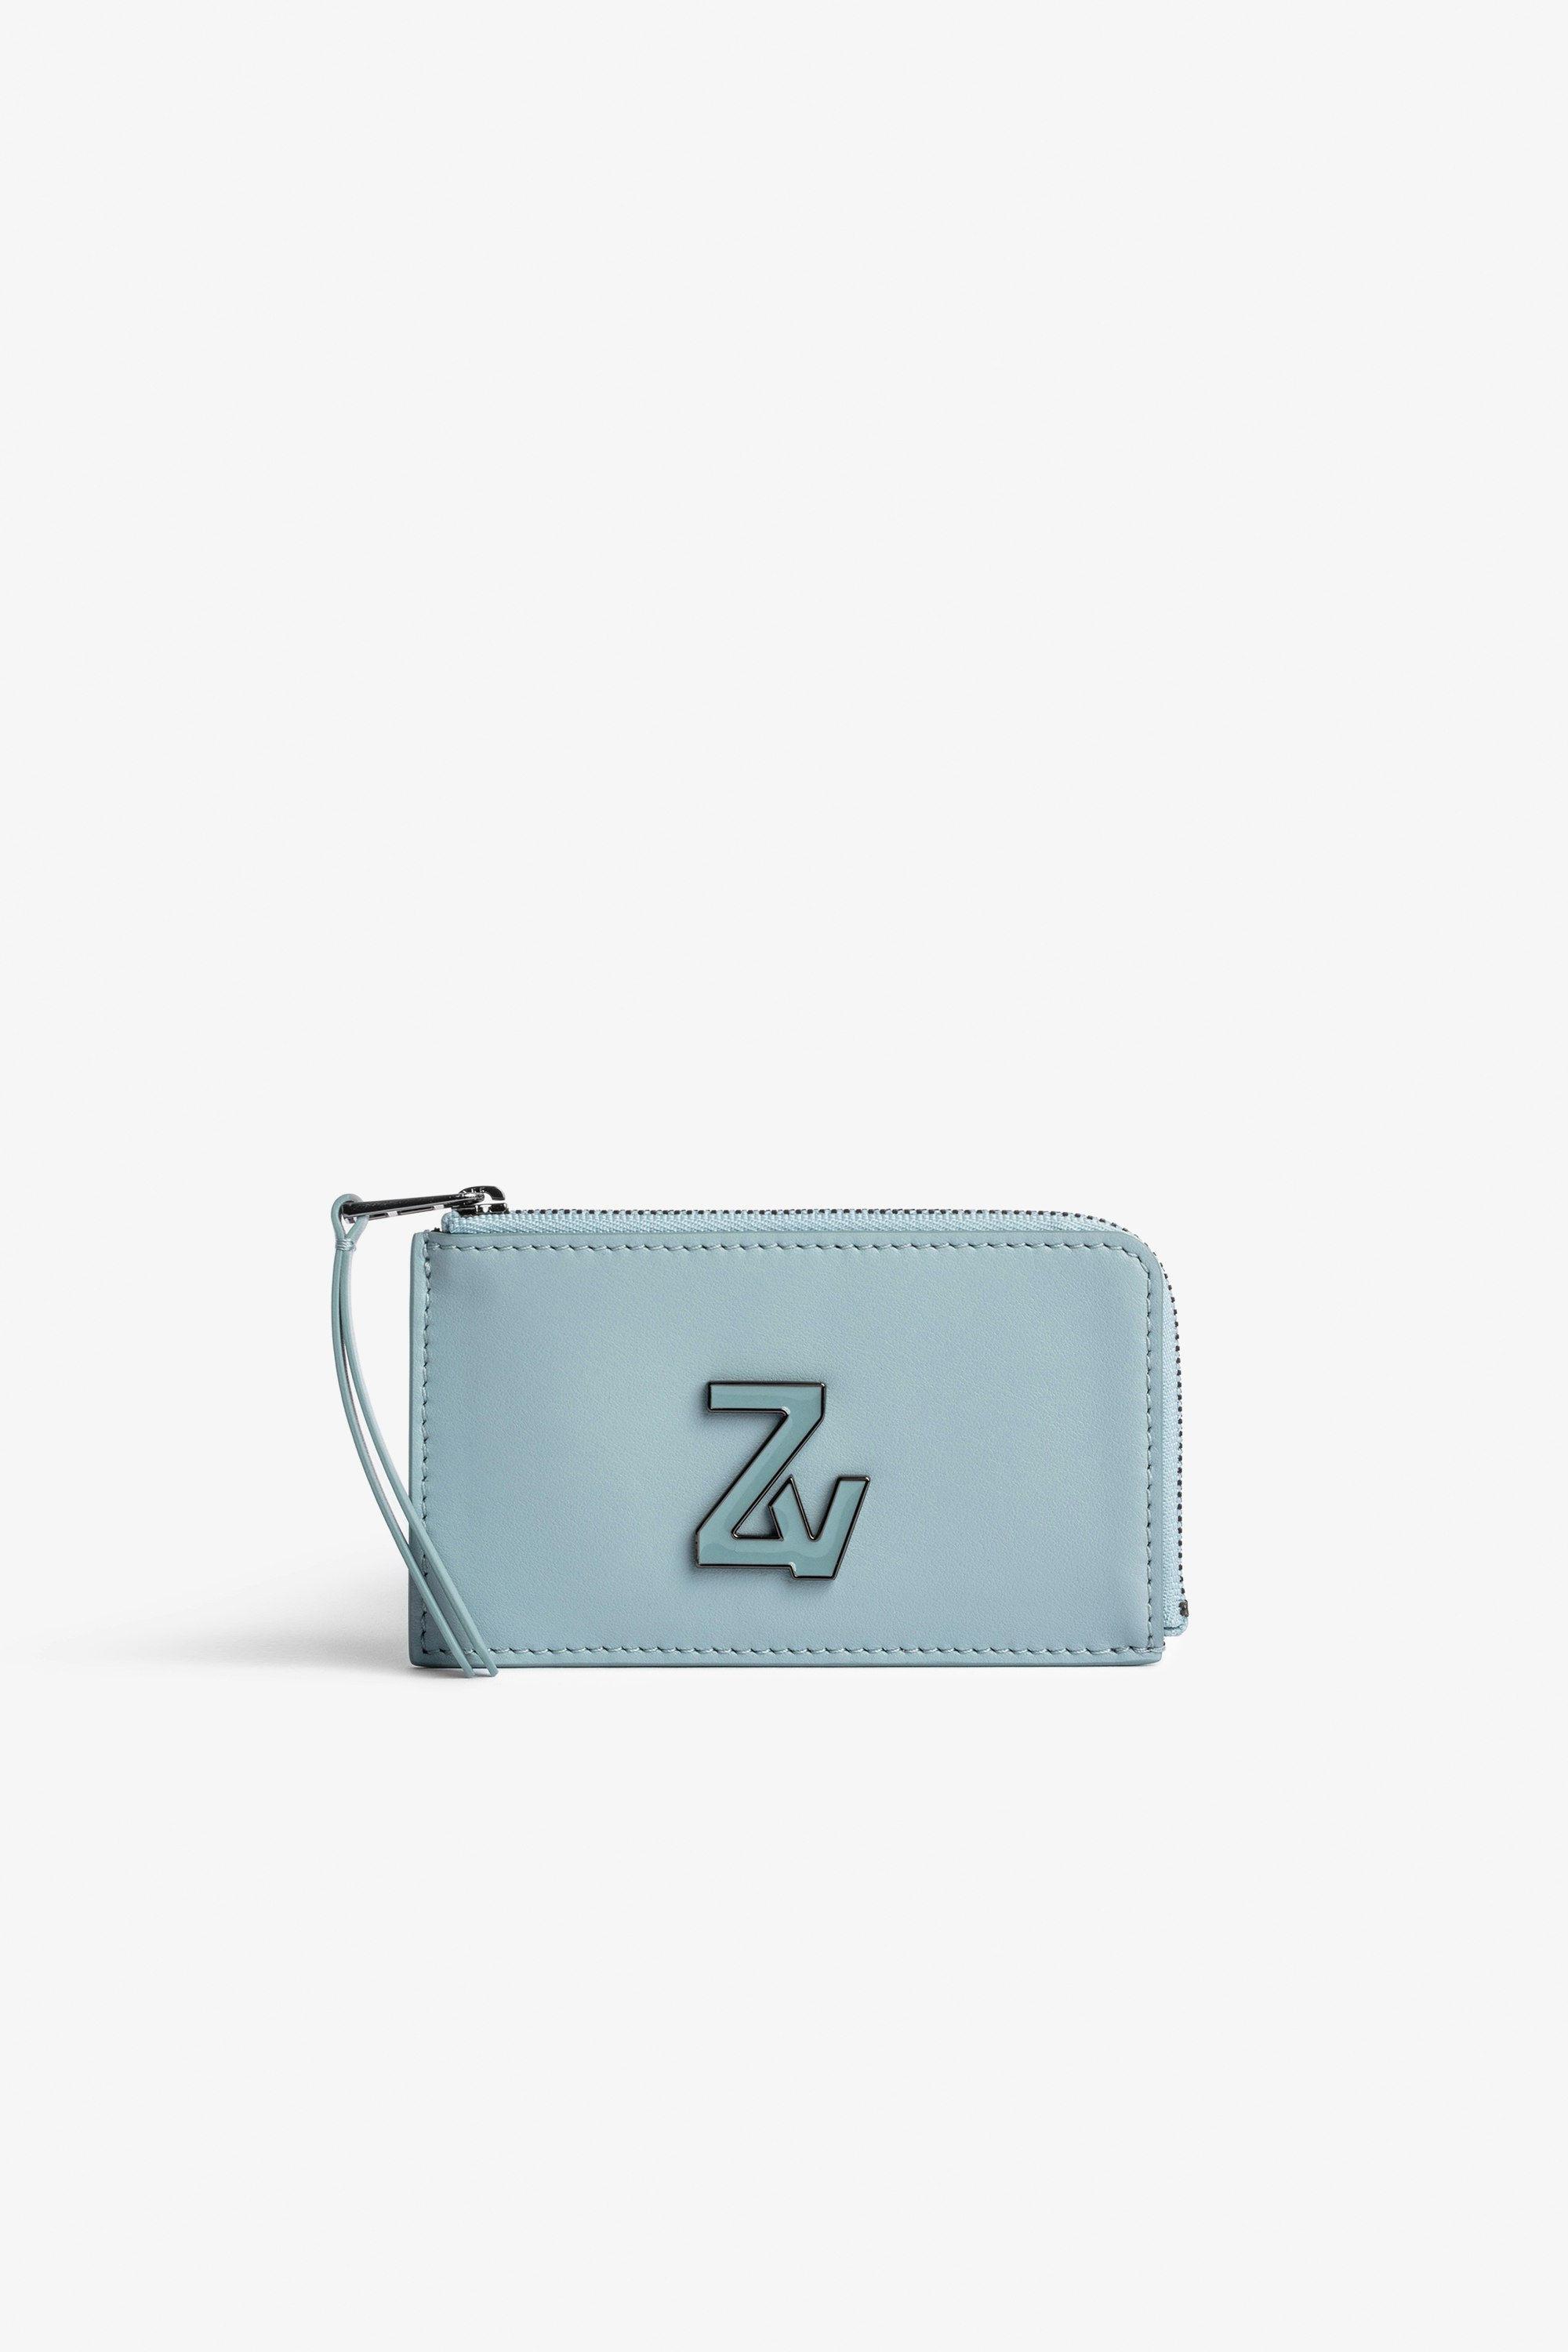 ZV Initiale Le Medium Monogram 財布 Zadig&Voltaire women's sky-blue leather cardholder